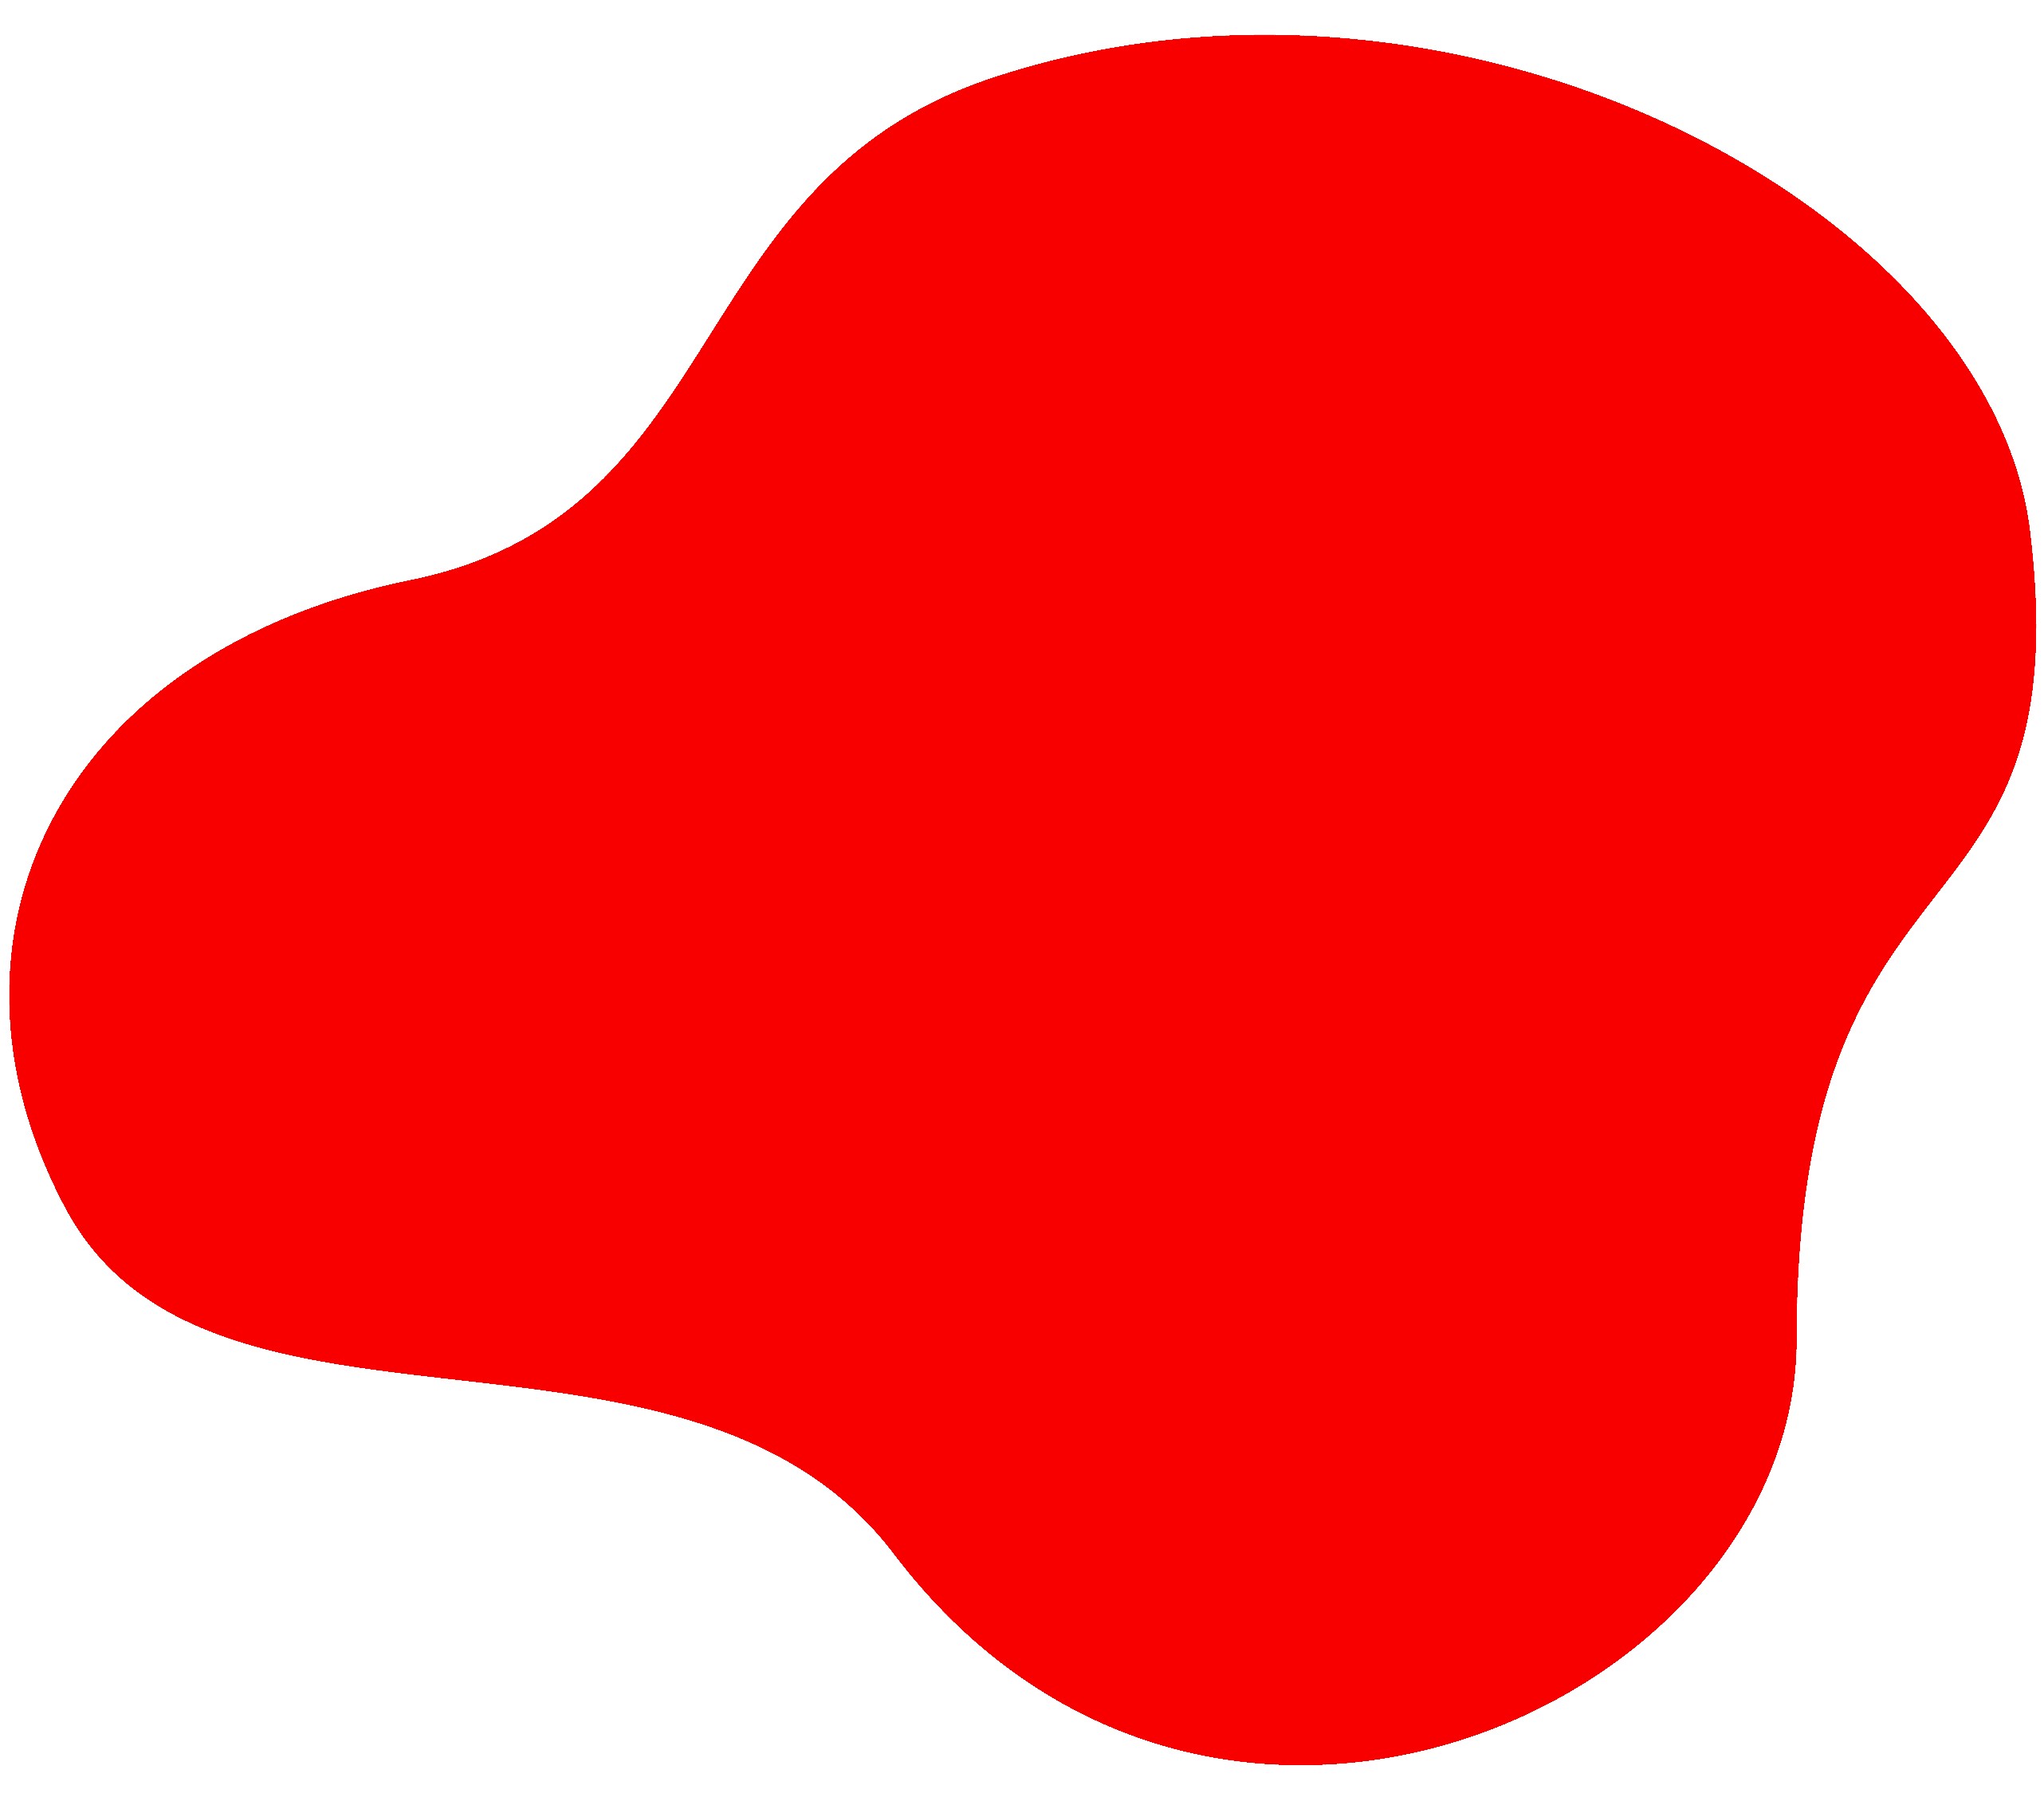 A bright red, irregularly shaped blob